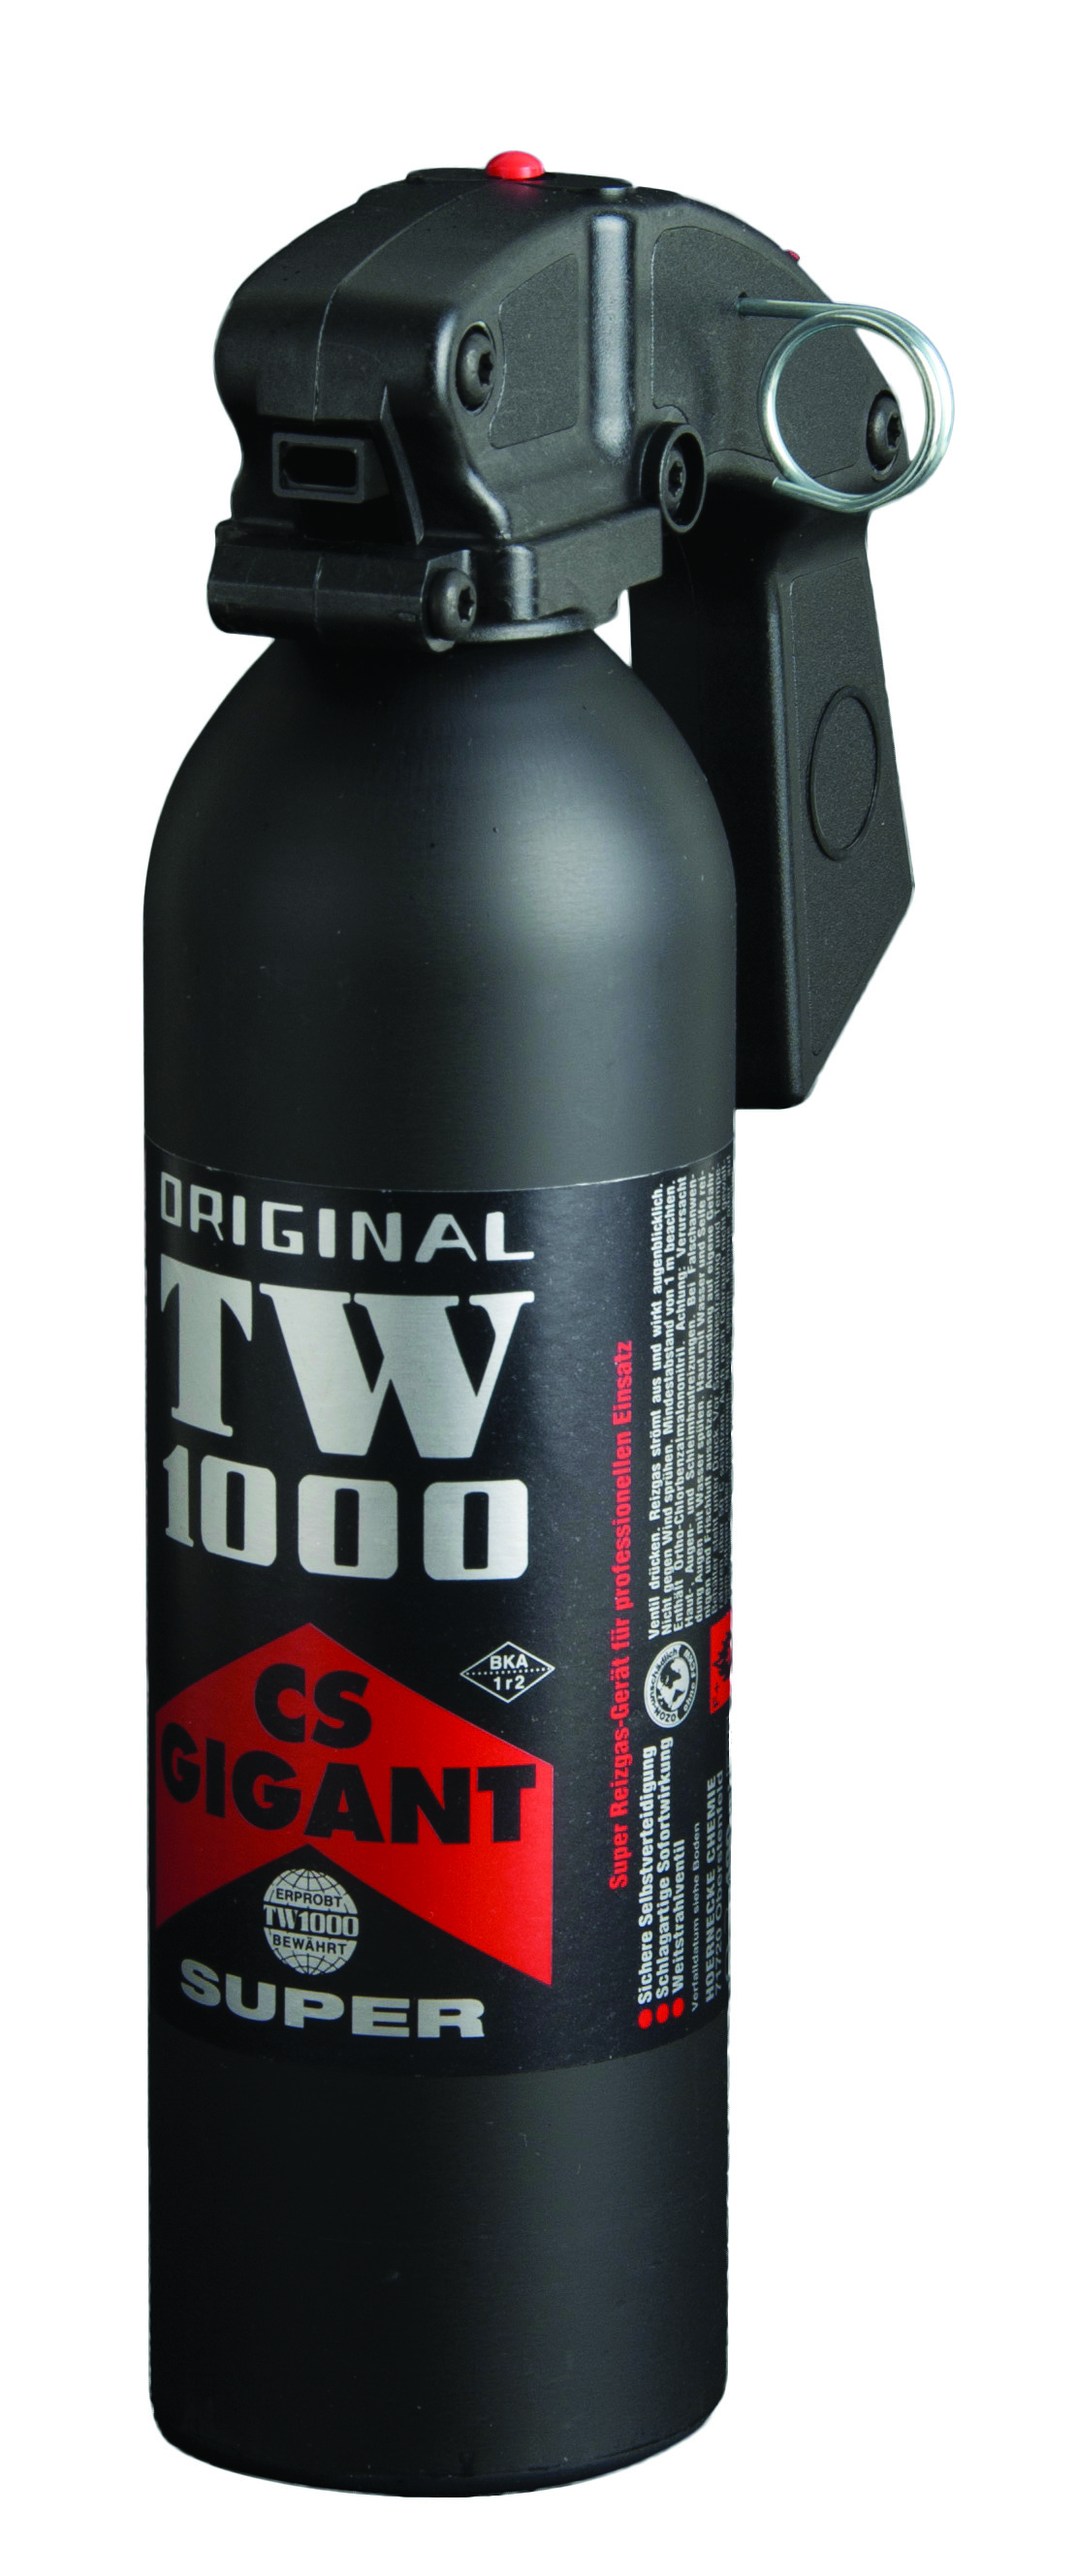 TW 1000 Super Gigant CS Spray 400 ml 